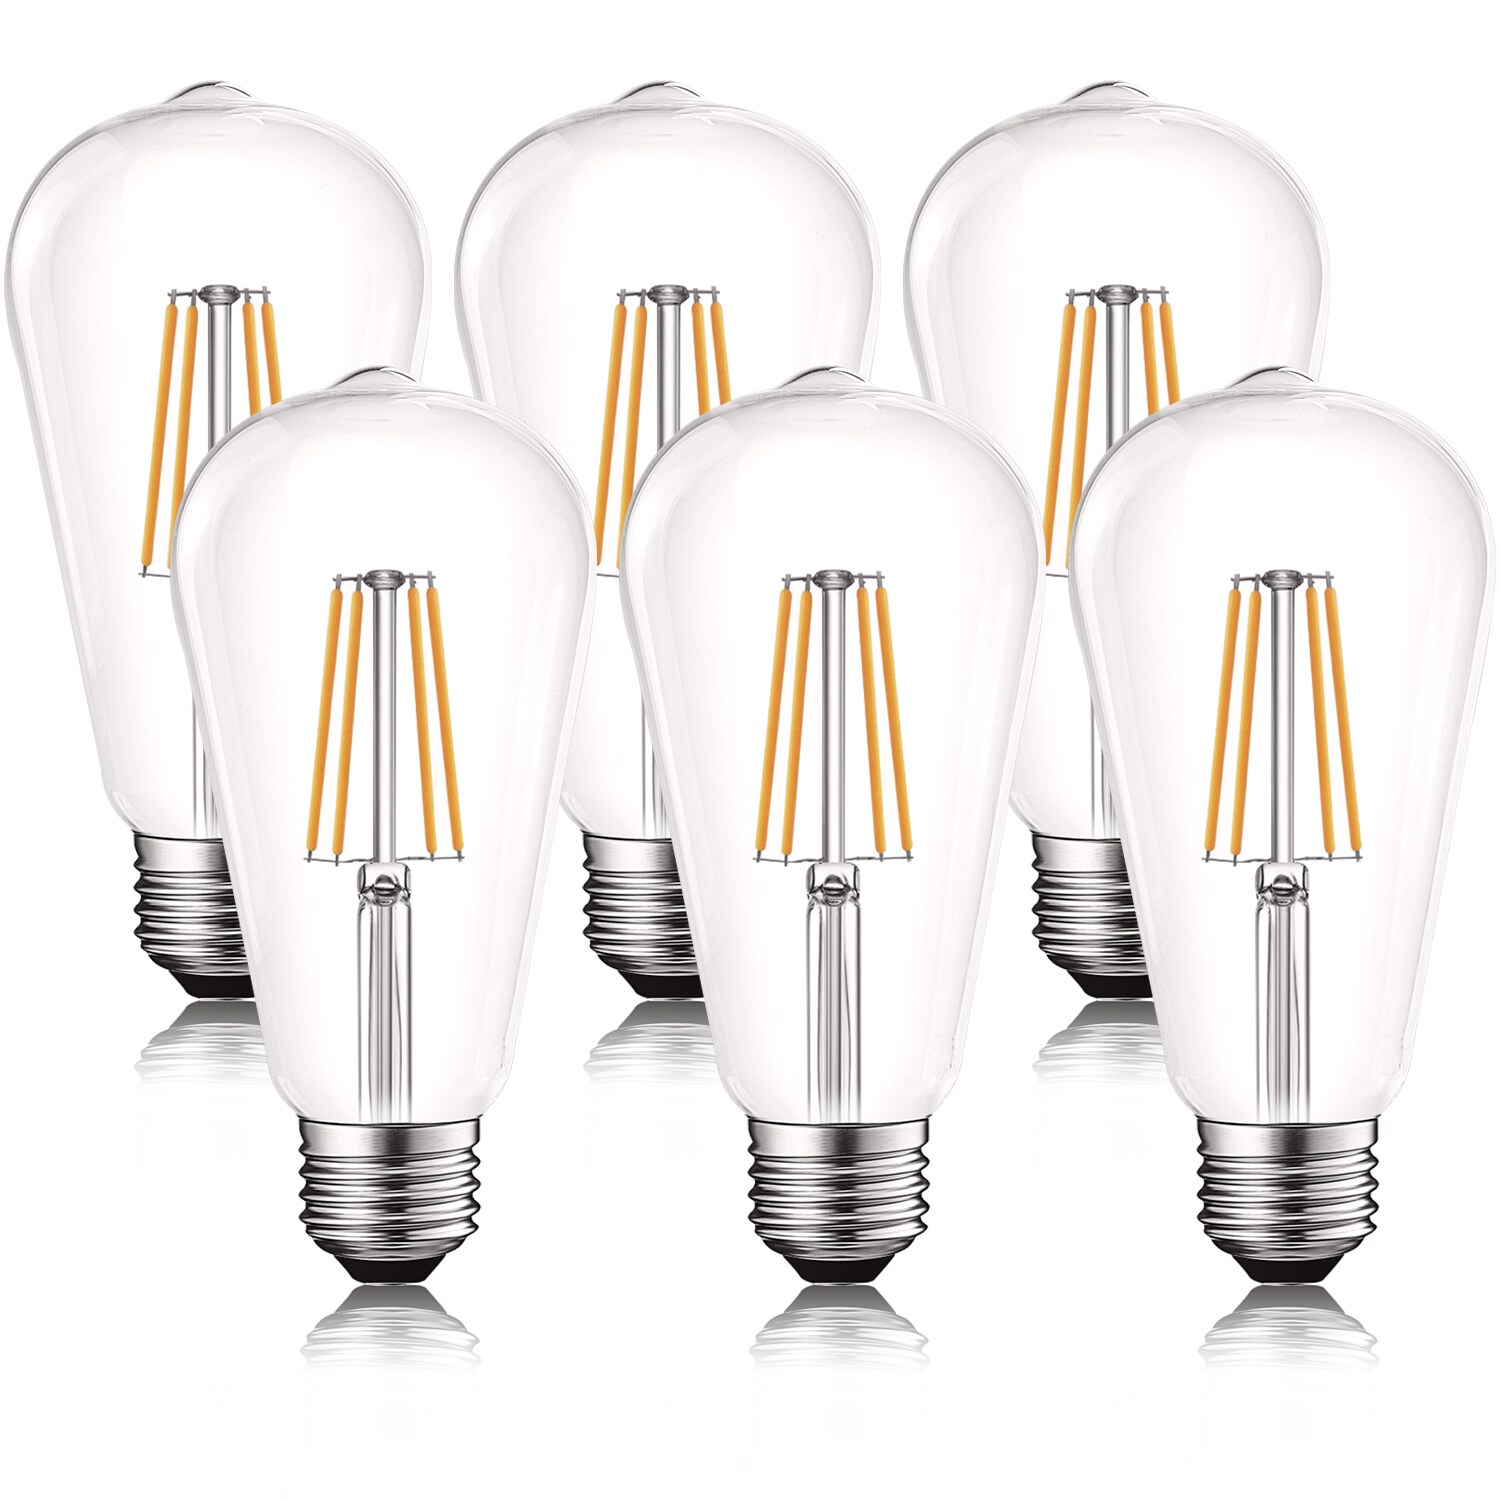 AcornSolution 5 Pack 60W Pearl Light Bulbs GLS Lamp Edison Screw Cap E27,6 Month Replacement Warranty 